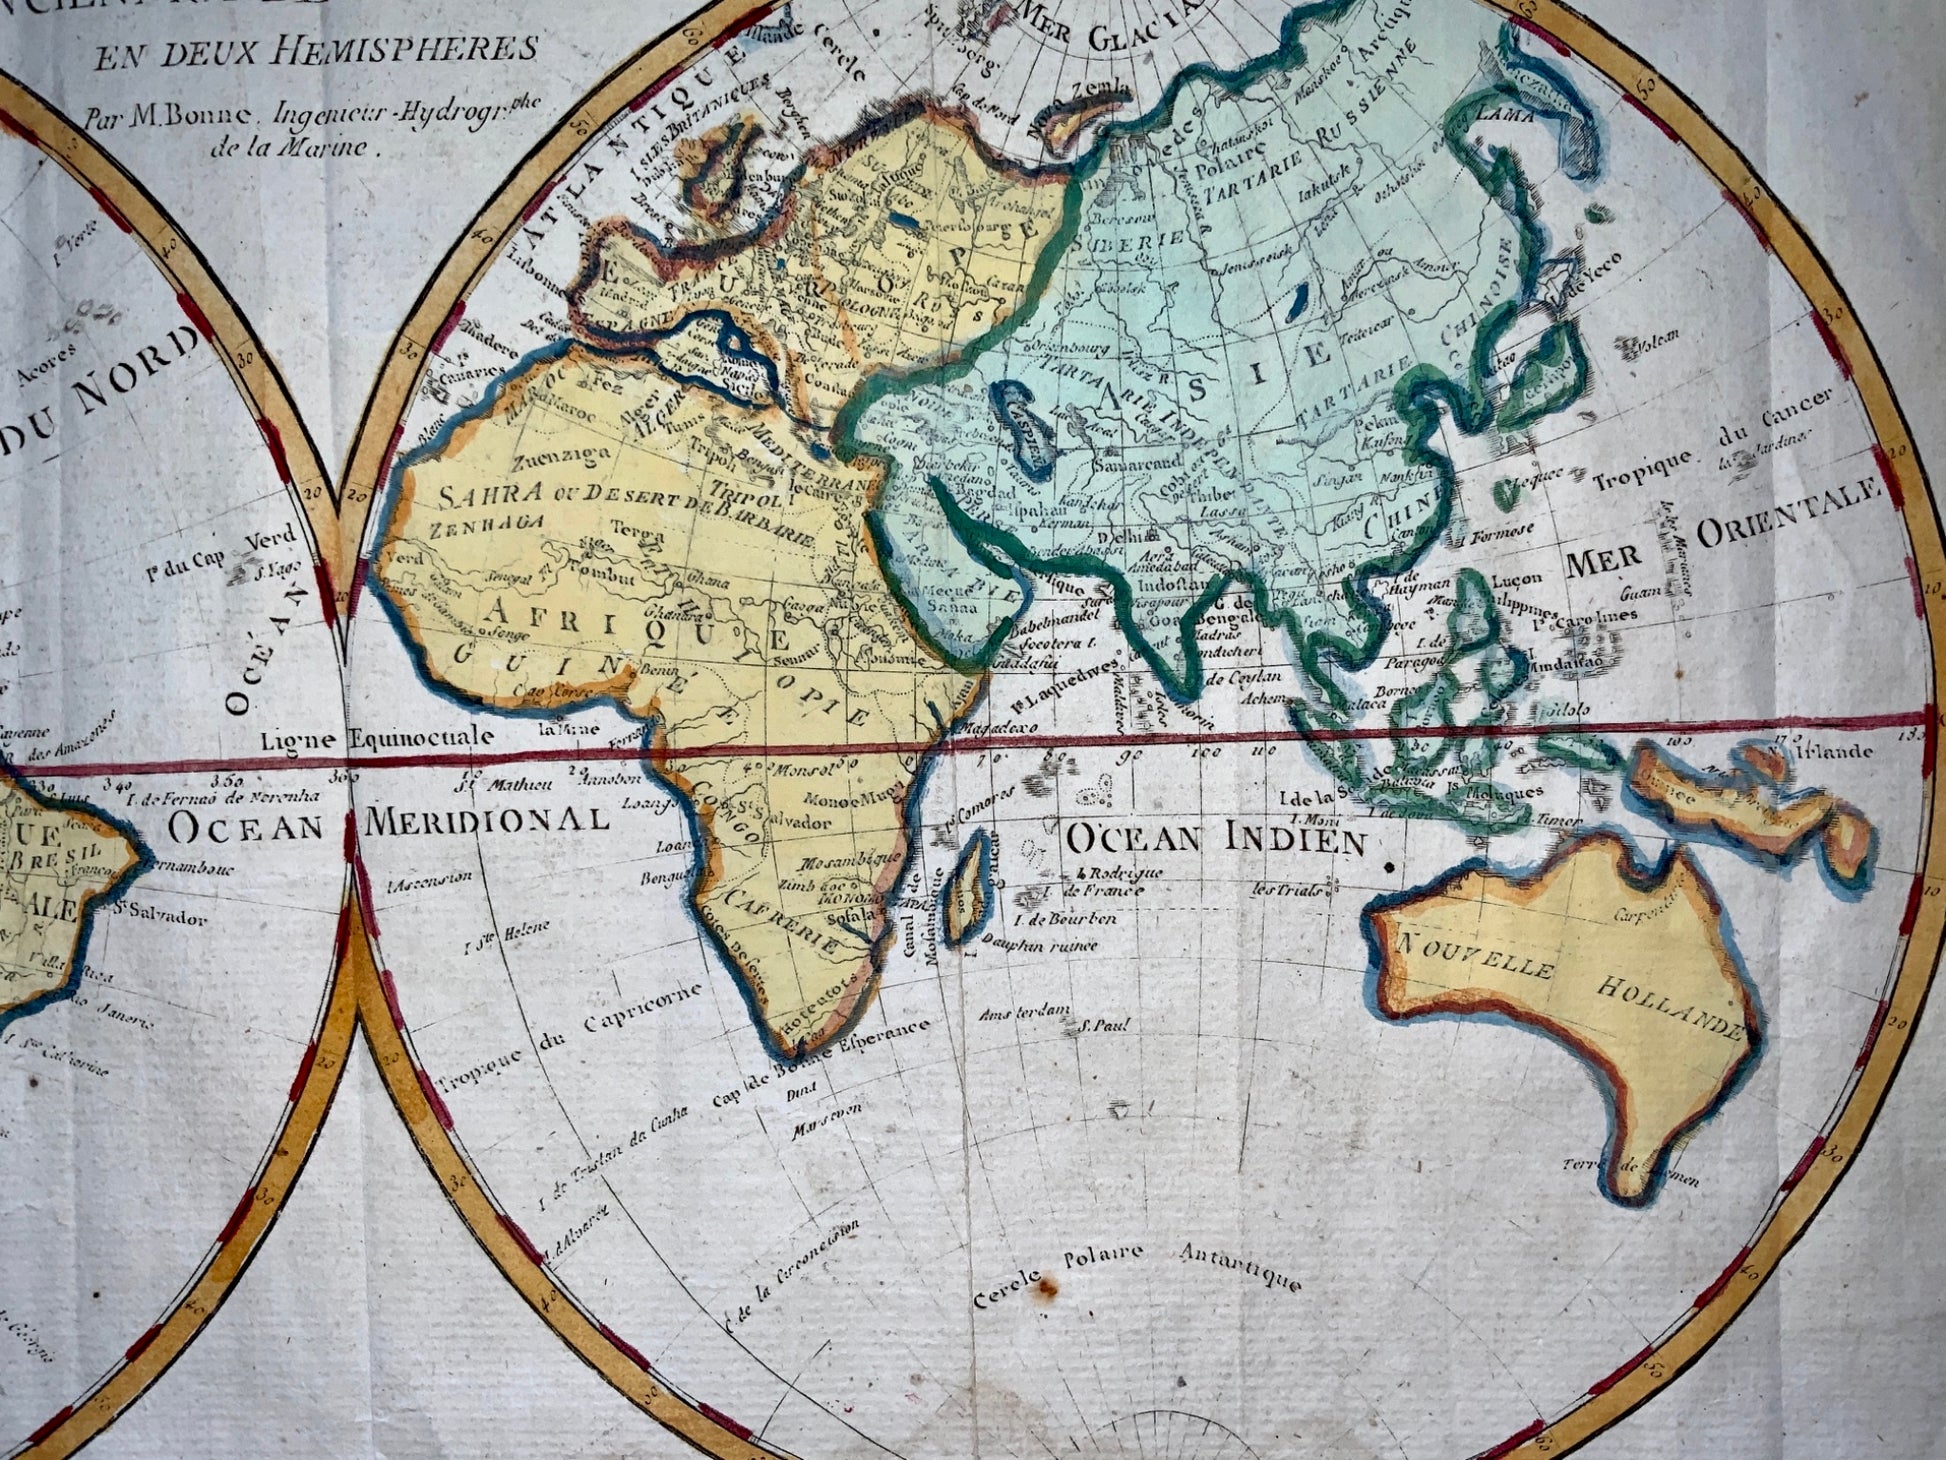 1780 Bonne - DOUBLE HEMISPHERE WORLD MAP - hand coloured engraved map